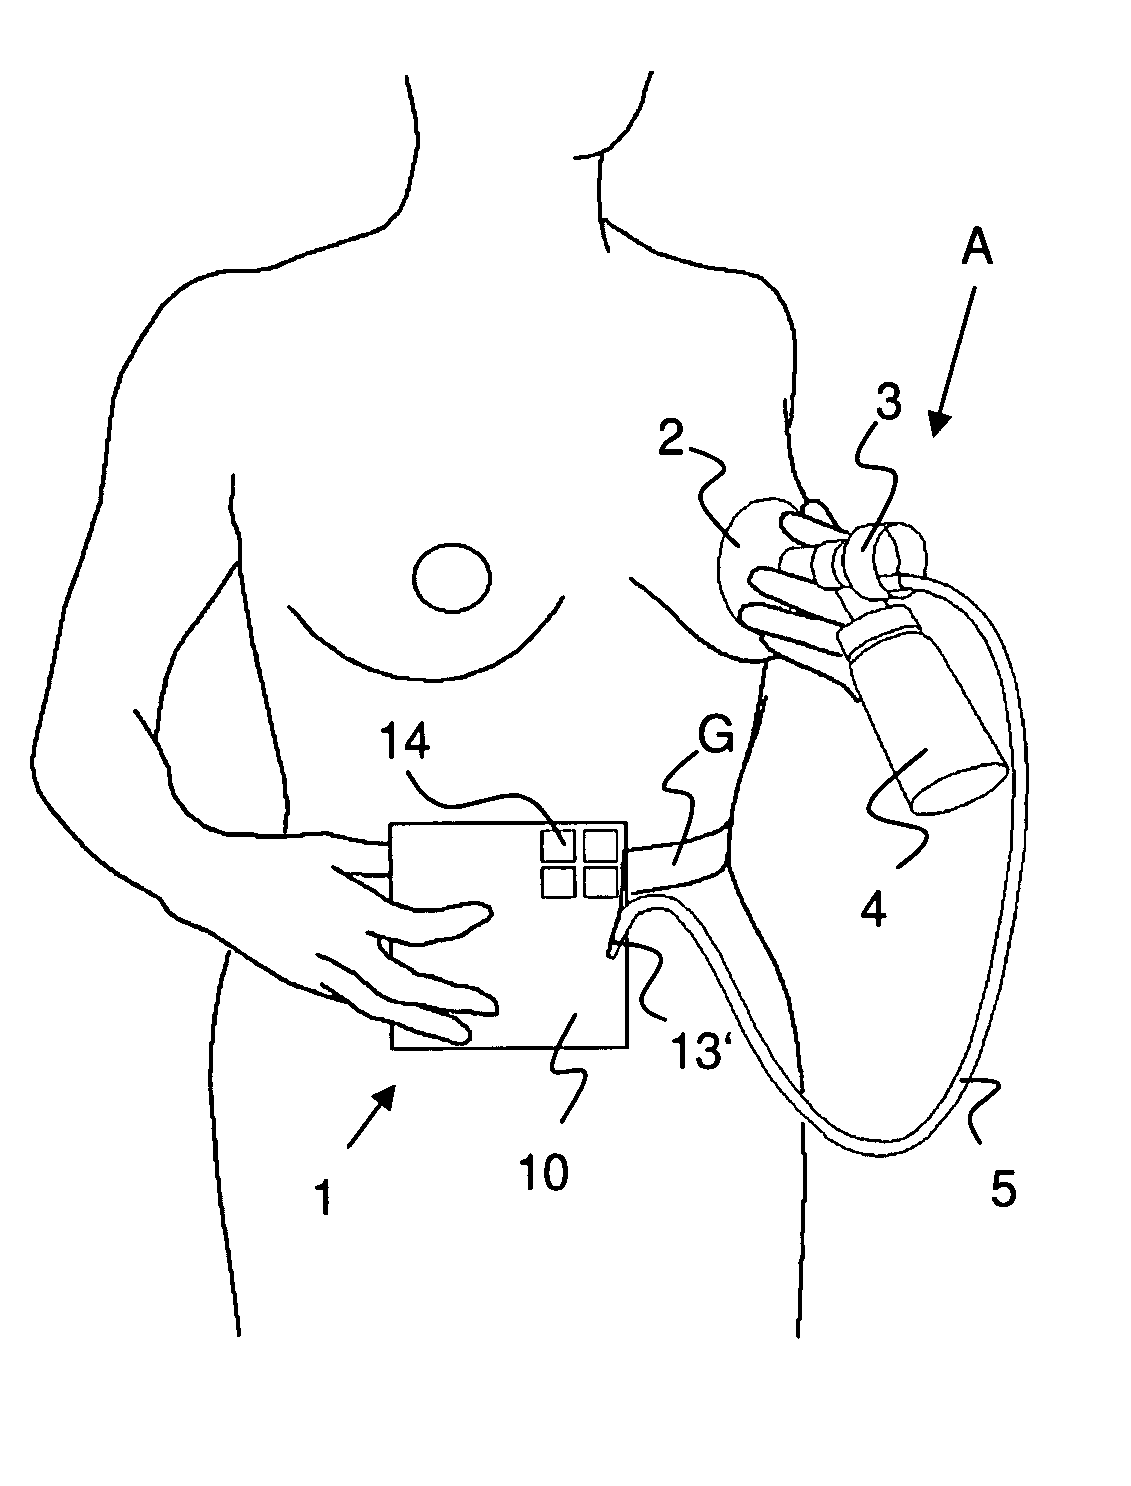 Portable breast pump